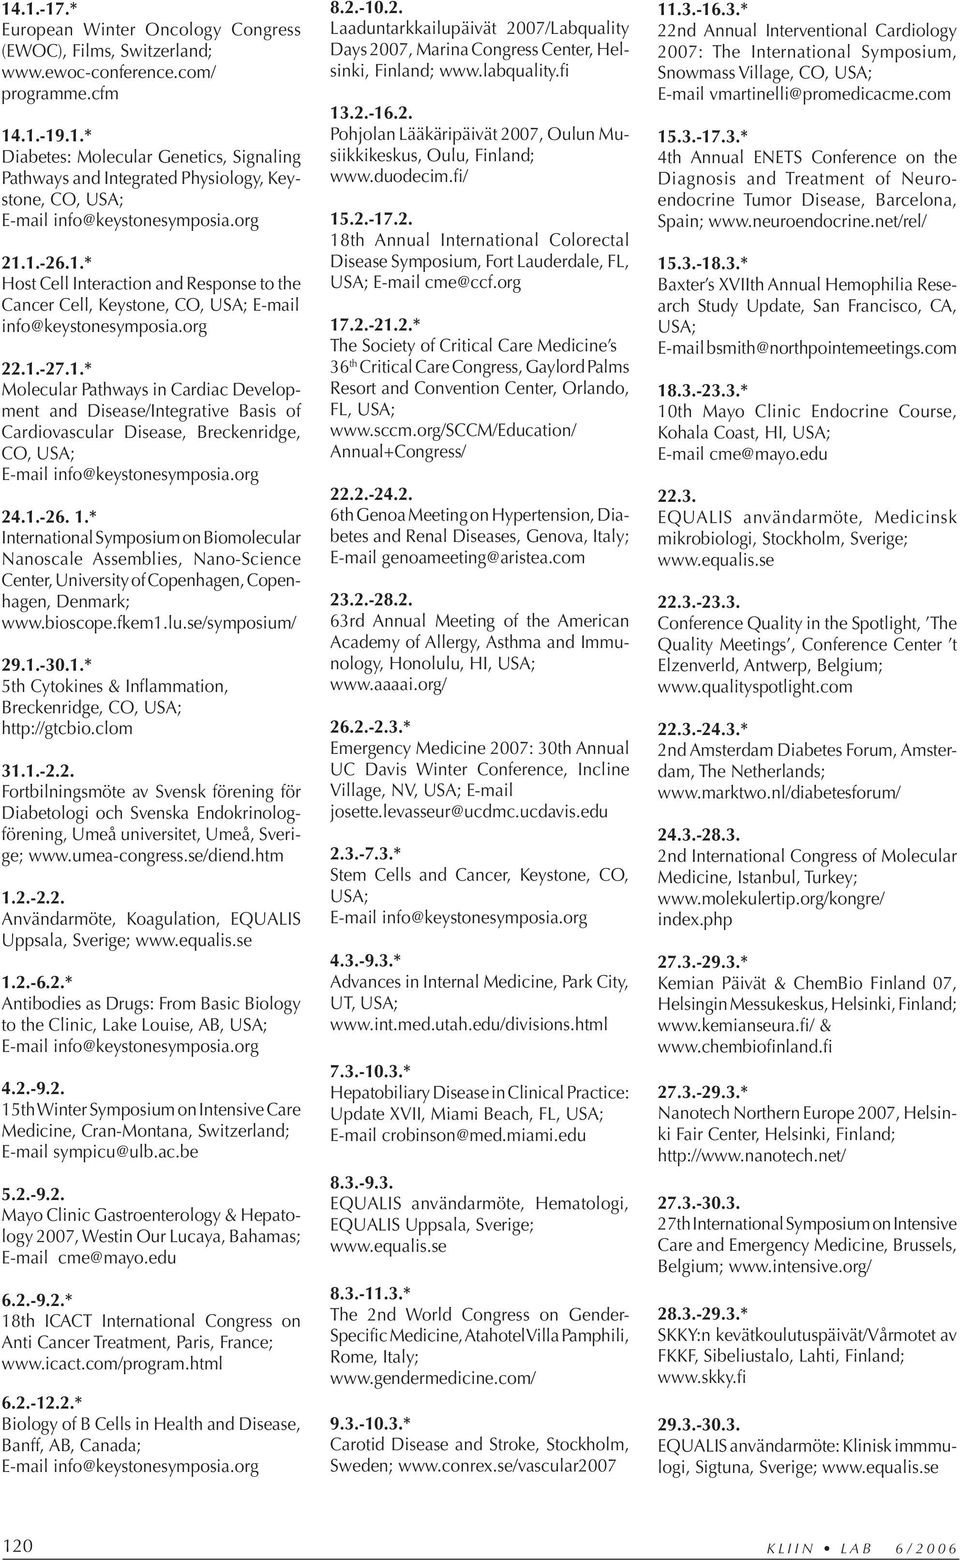 org 24.1.-26. 1.* International Symposium on Biomolecular Nanoscale Assemblies, Nano-Science Center, University of Copenhagen, Copenhagen, Denmark; www.bioscope.fkem1.lu.se/symposium/ 29.1.-30.1.* 5th Cytokines & Inflammation, Breckenridge, CO, USA; http://gtcbio.